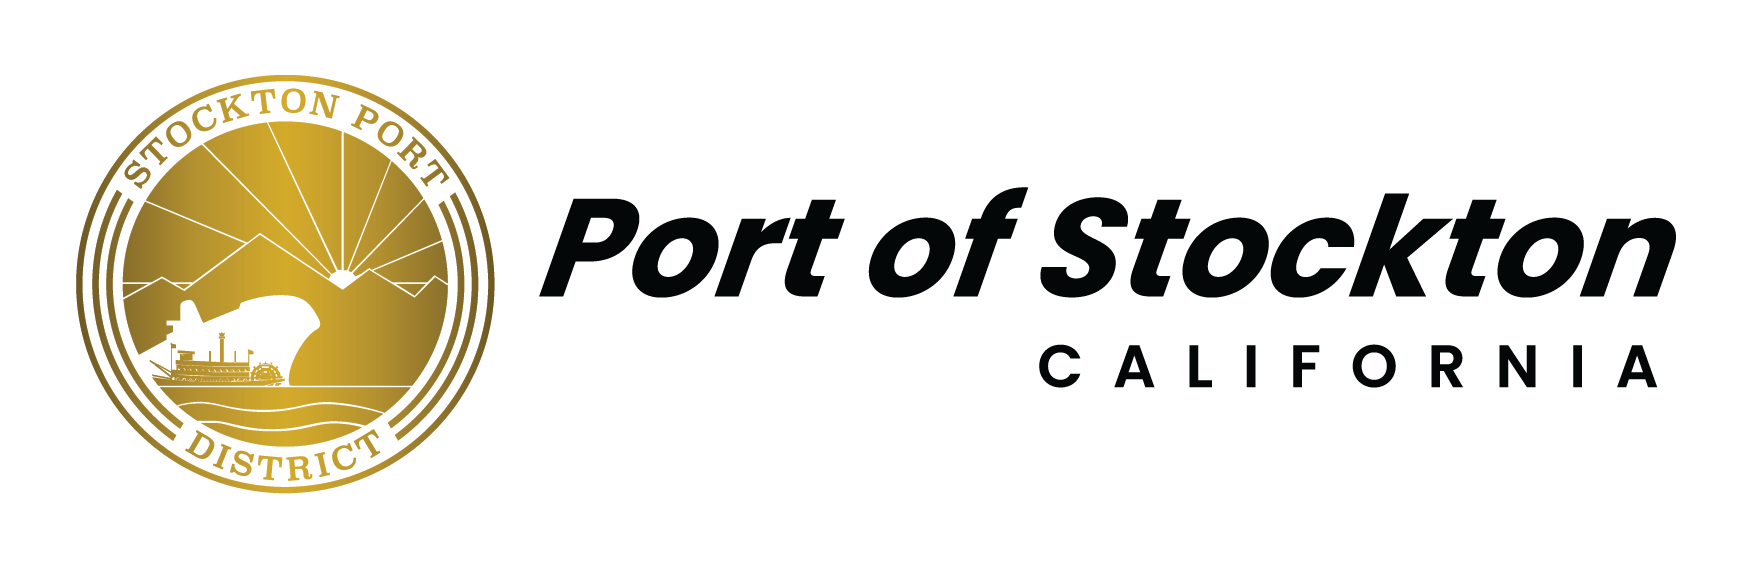 Port of Stockton logo